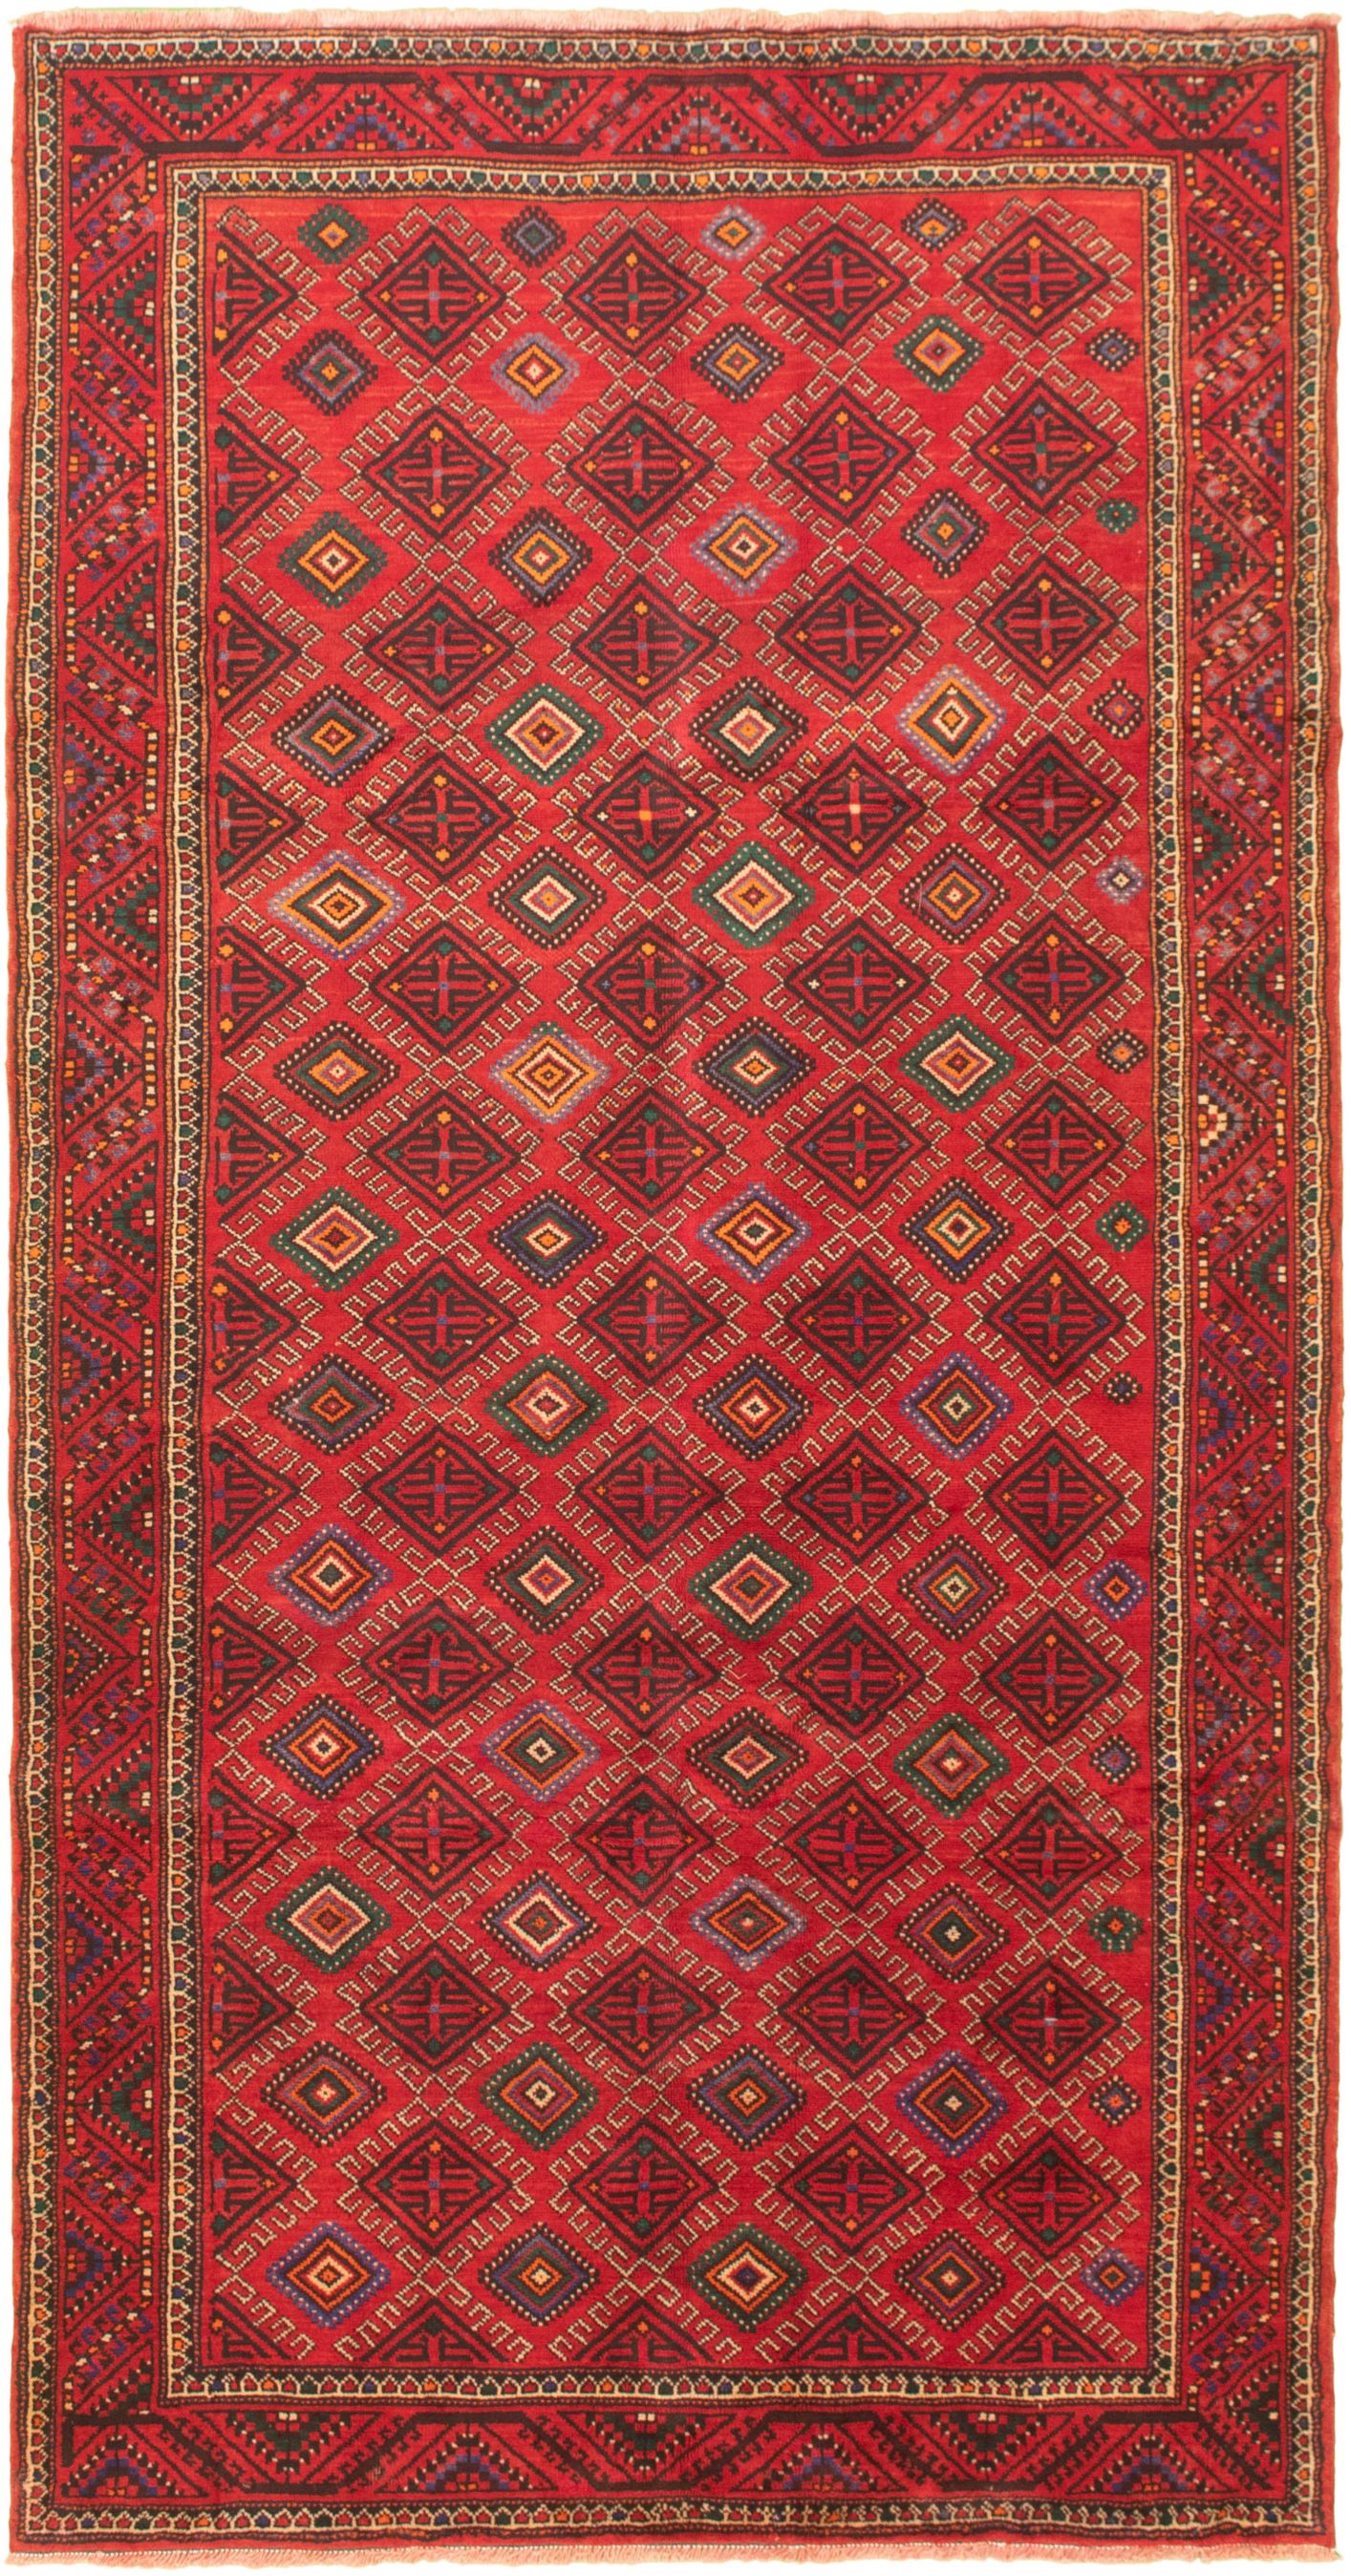 Hand-knotted Konya Anatolian Red Wool Rug 5'1" x 9'11"  Size: 5'1" x 9'11"  